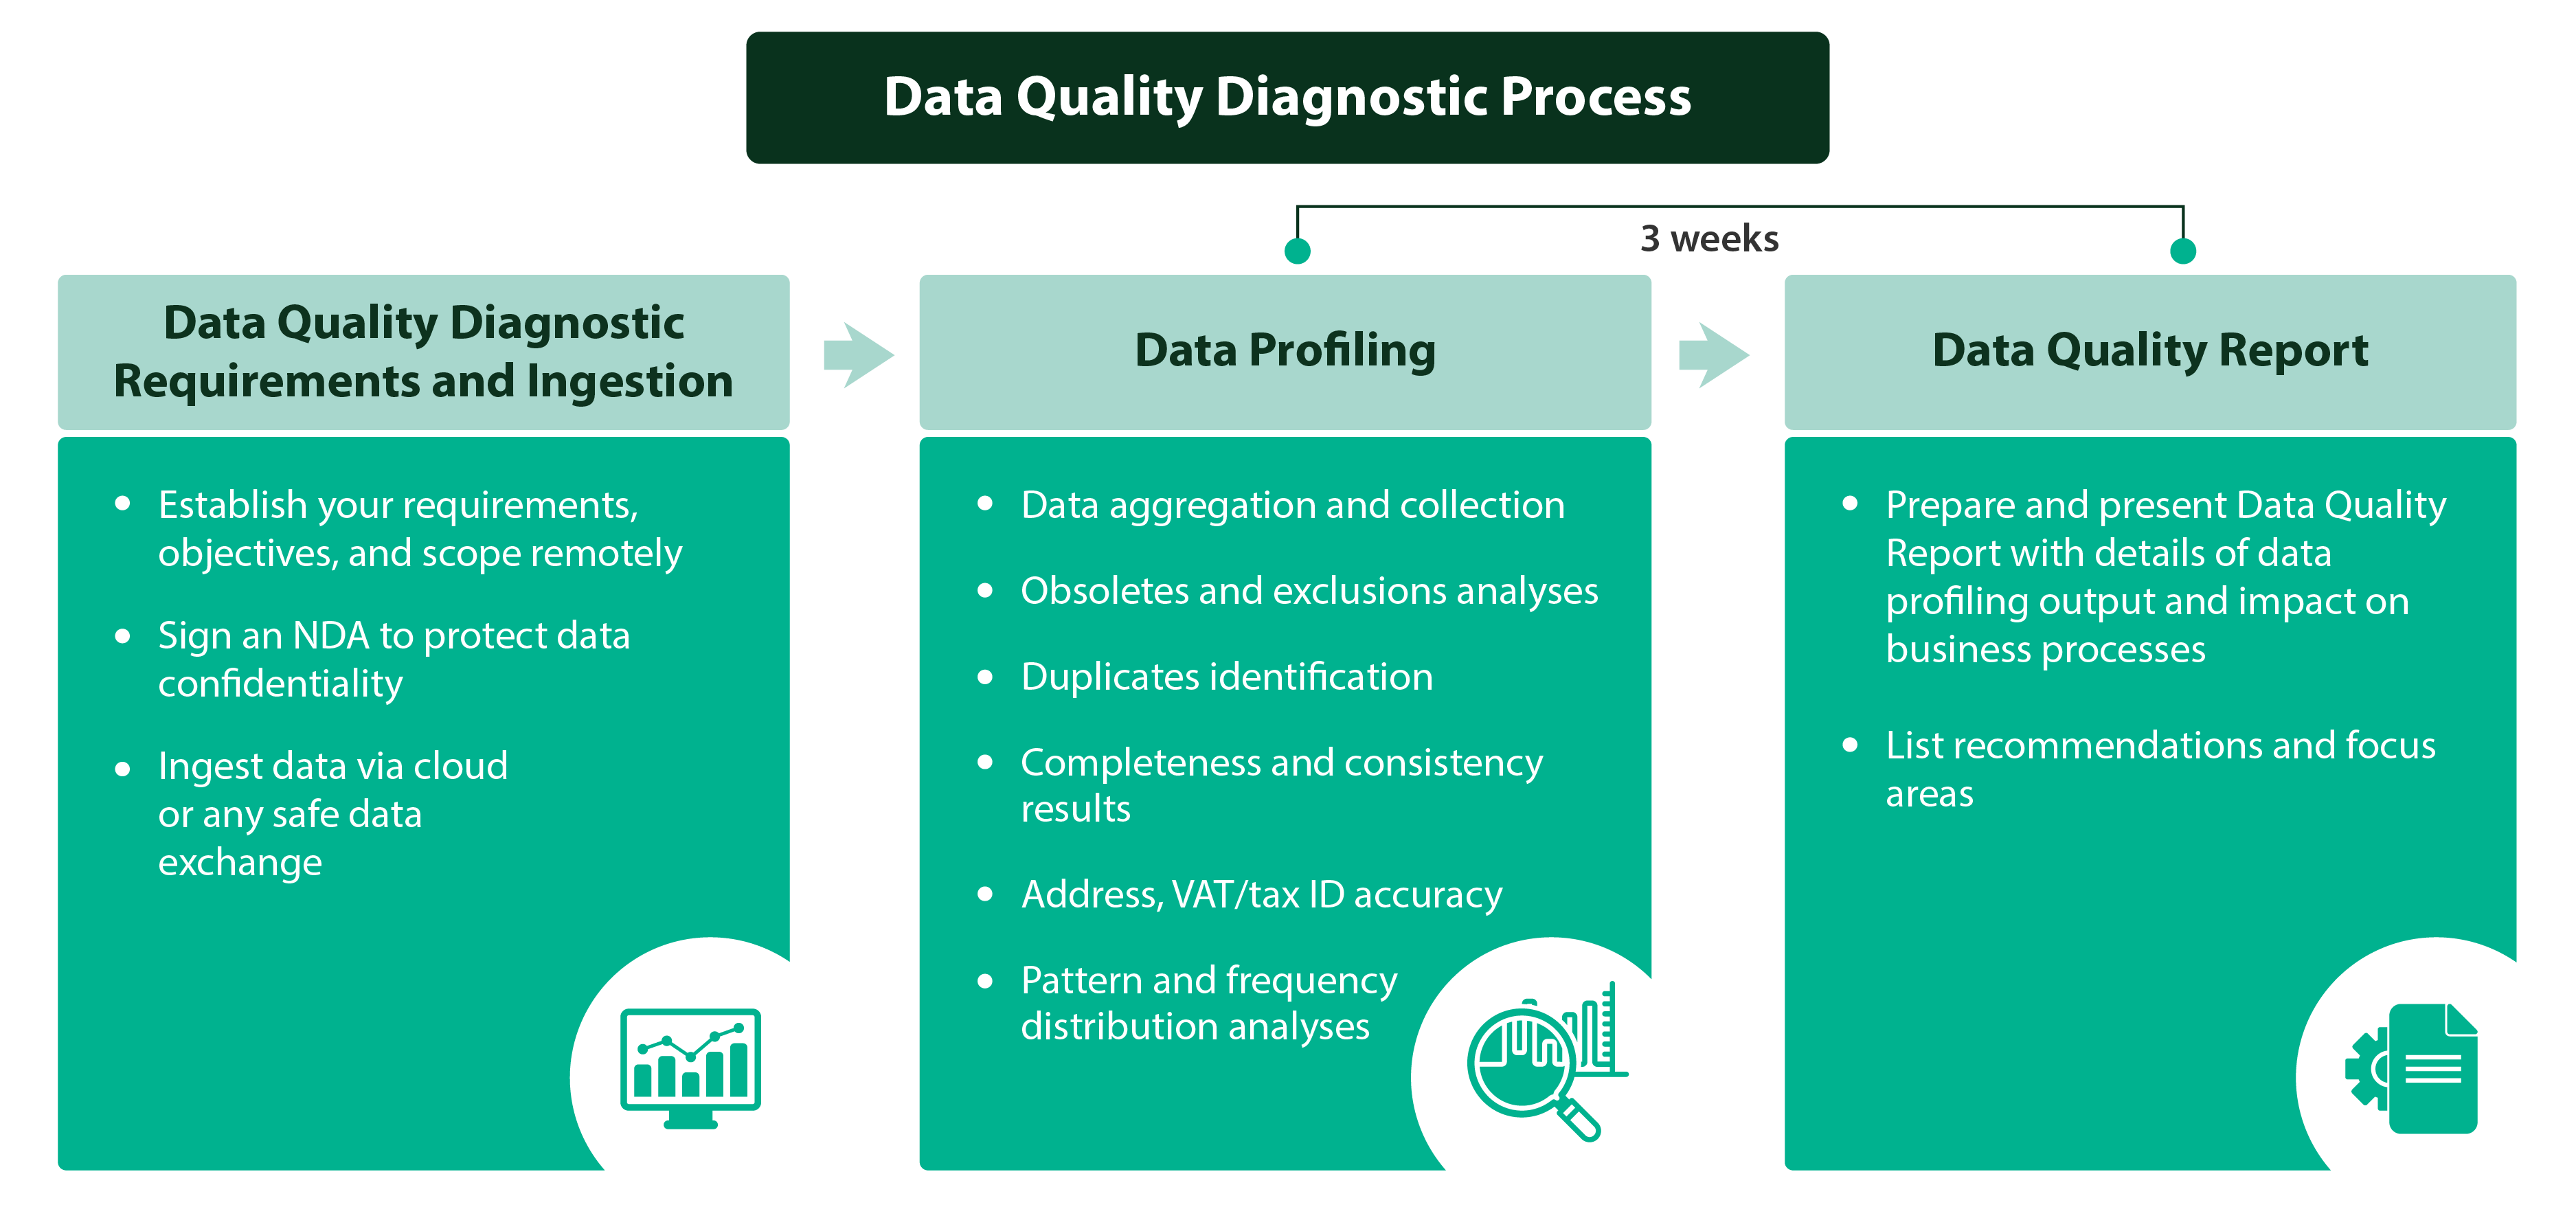 Data Quality Diagnostic Process